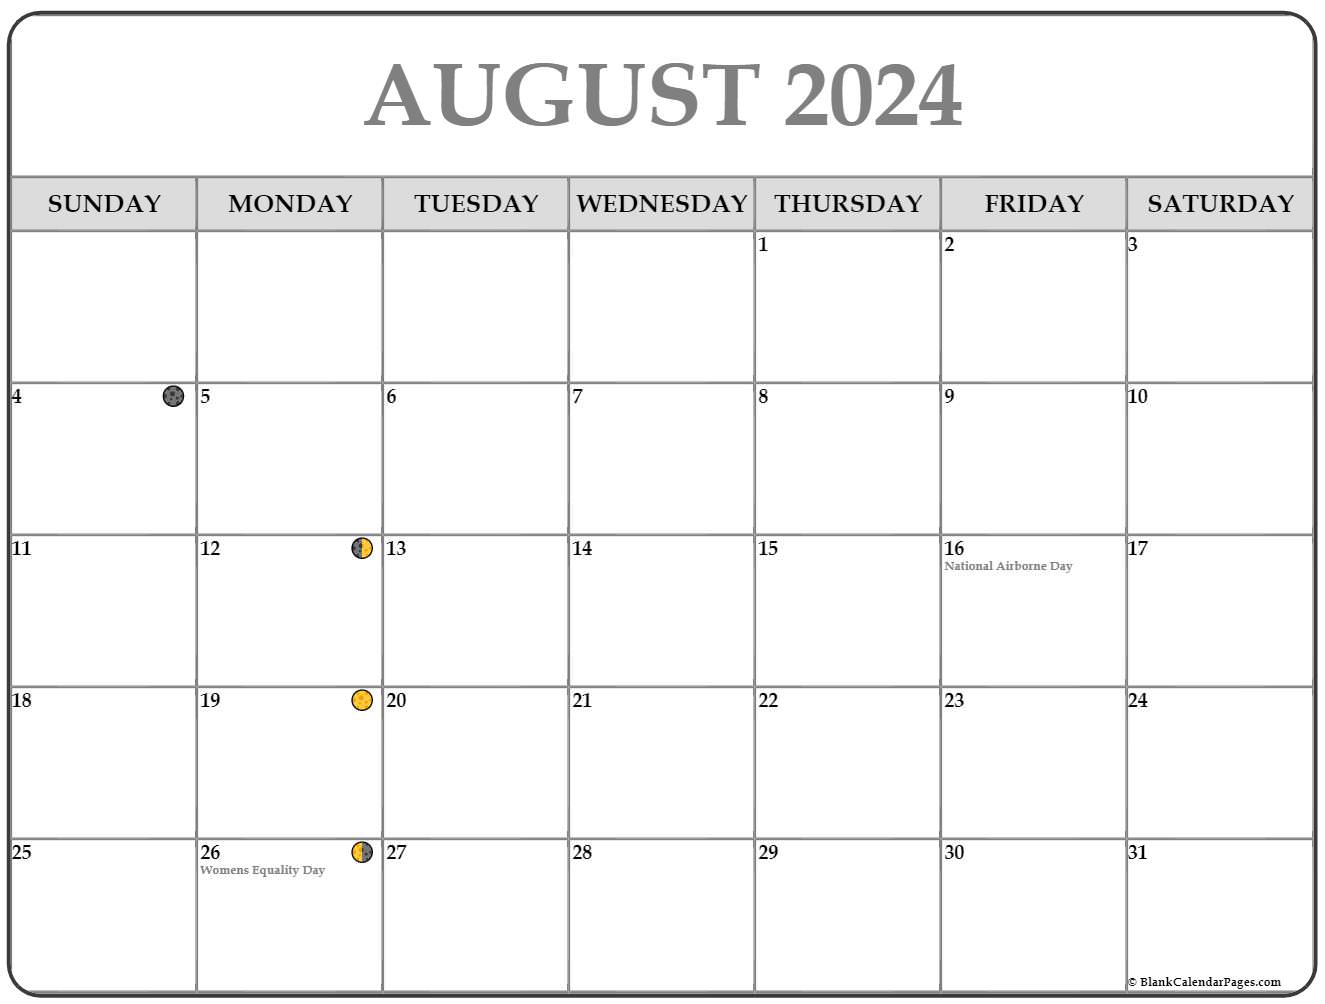 Lunar Calendar September 2022 August 2022 Lunar Calendar | Moon Phase Calendar